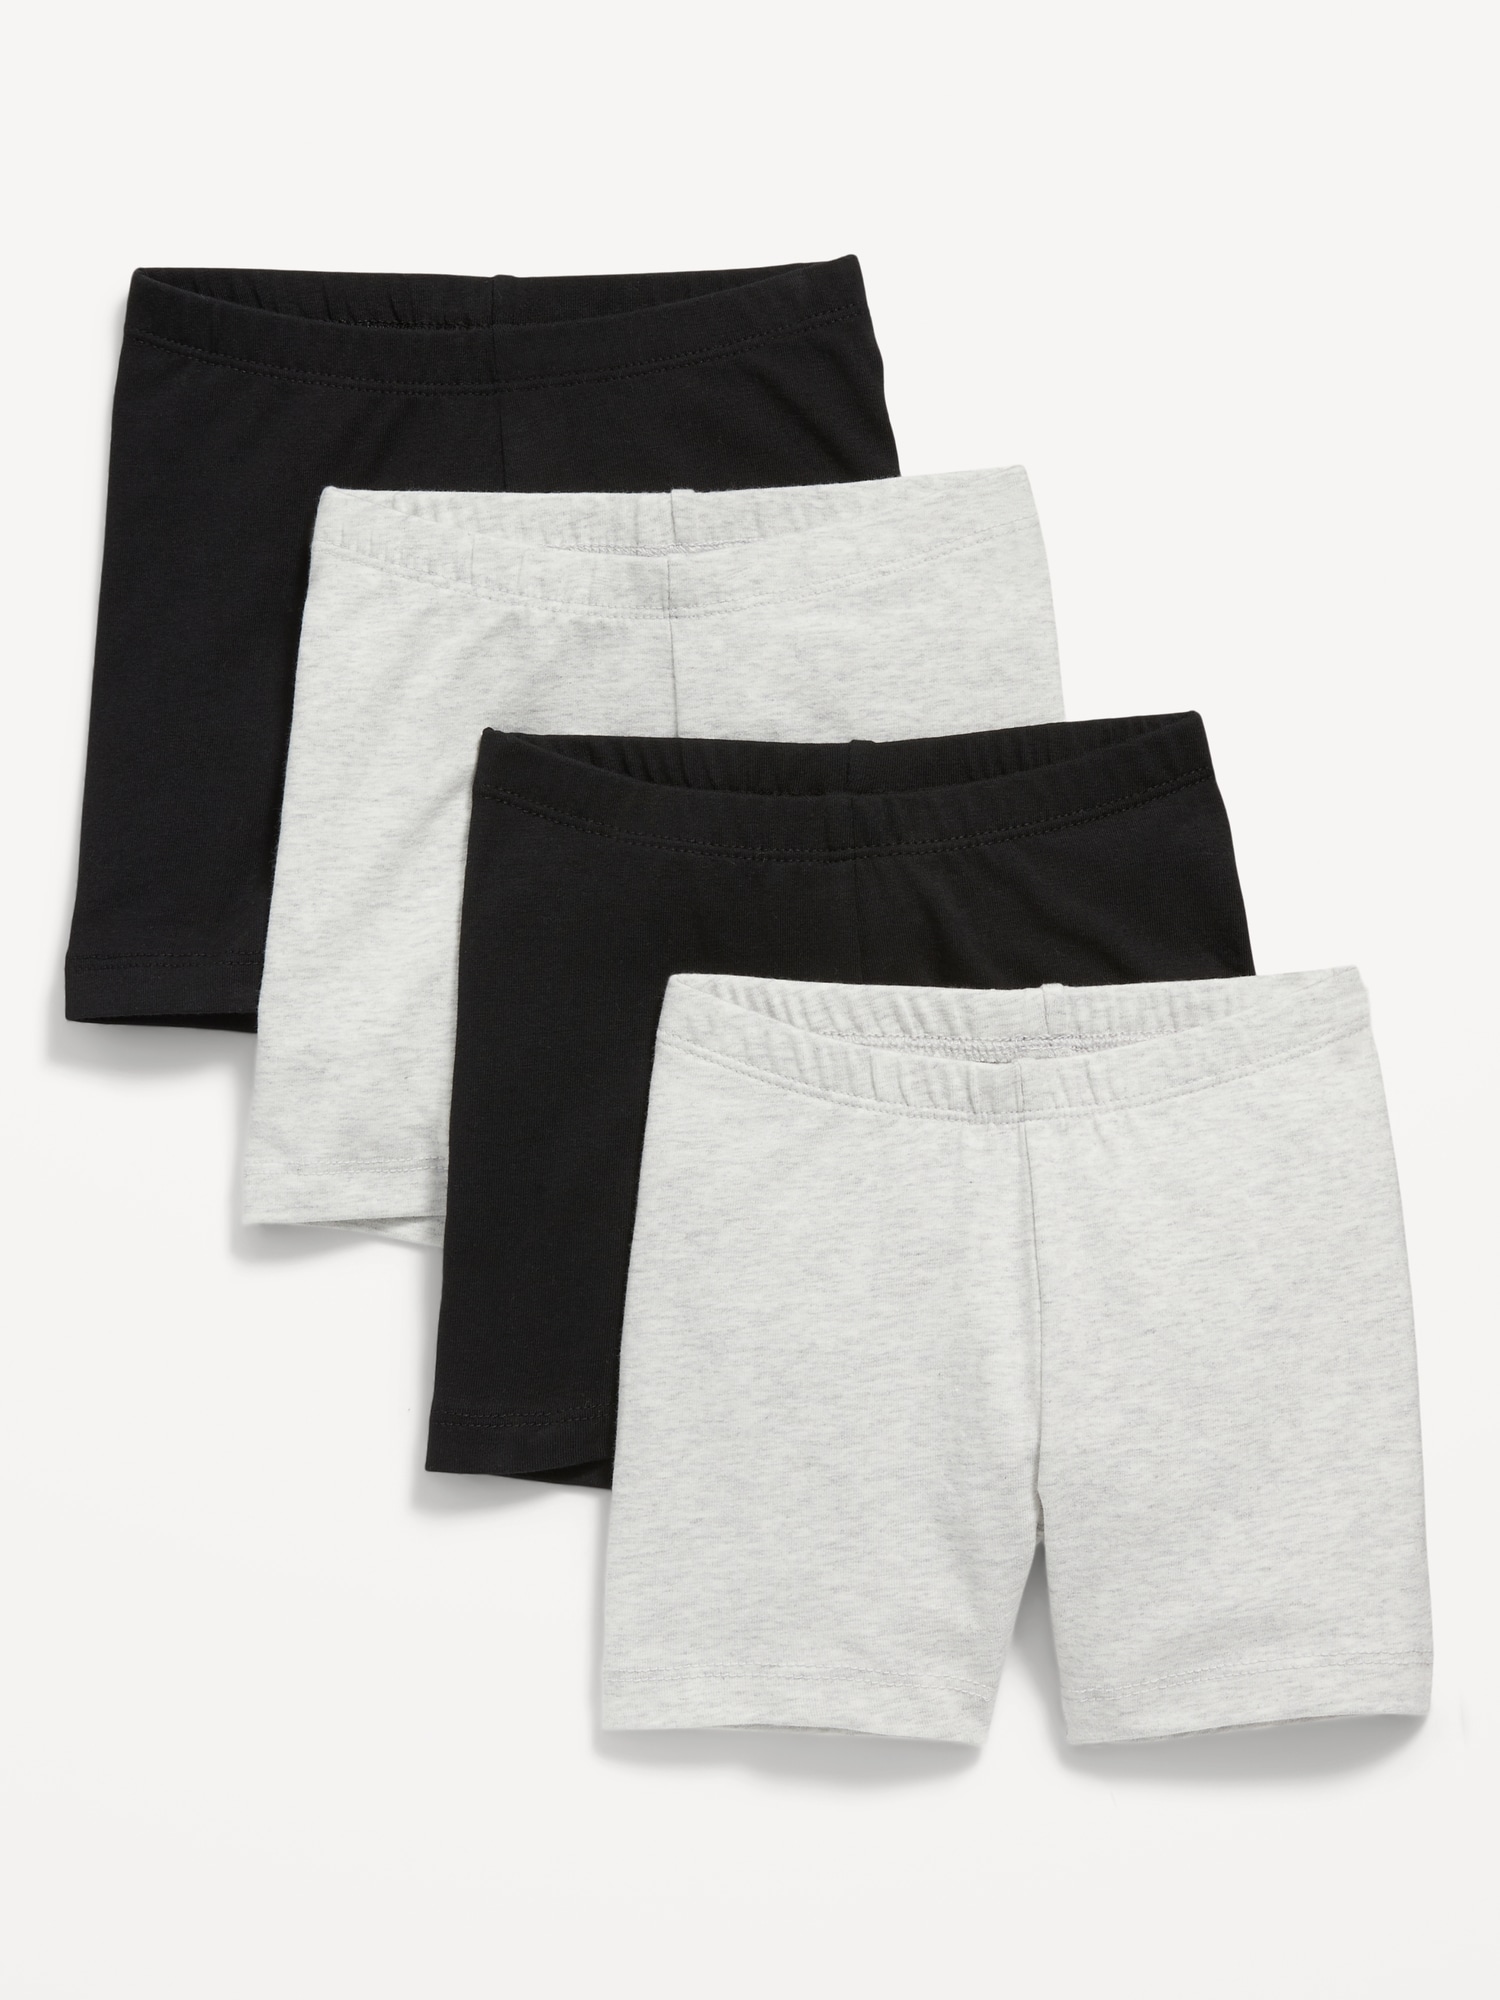 Jersey Biker Shorts 4-Pack for Toddler Girls Hot Deal